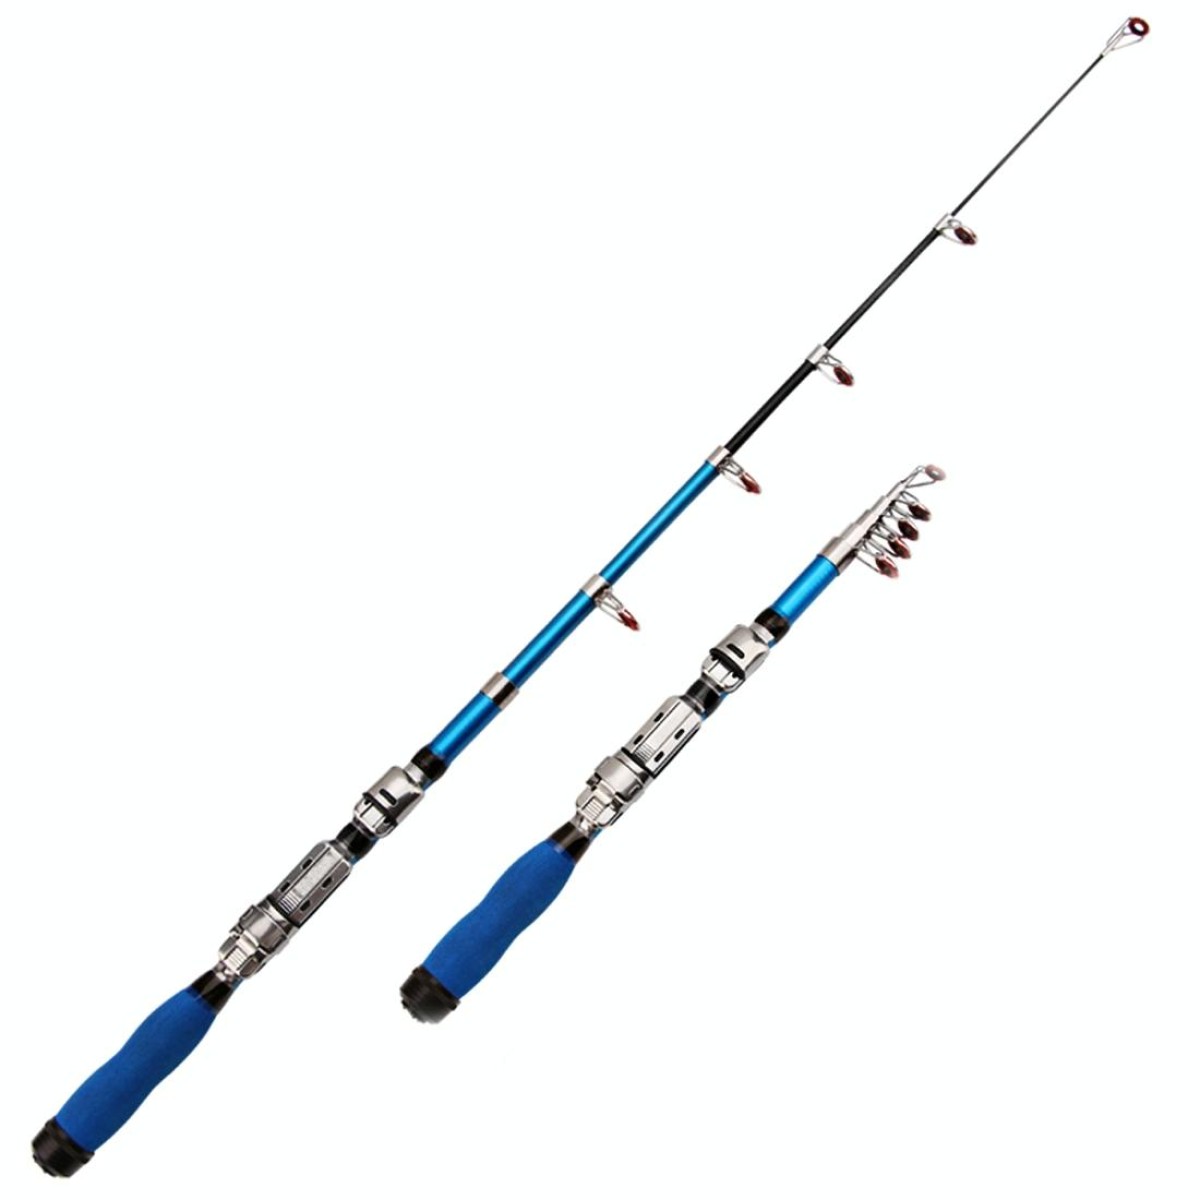 36cm Portable Telescopic Sea Fishing Rod Mini Fishing Pole, Extended Length : 2.1m, Blue Clip Reel Seat